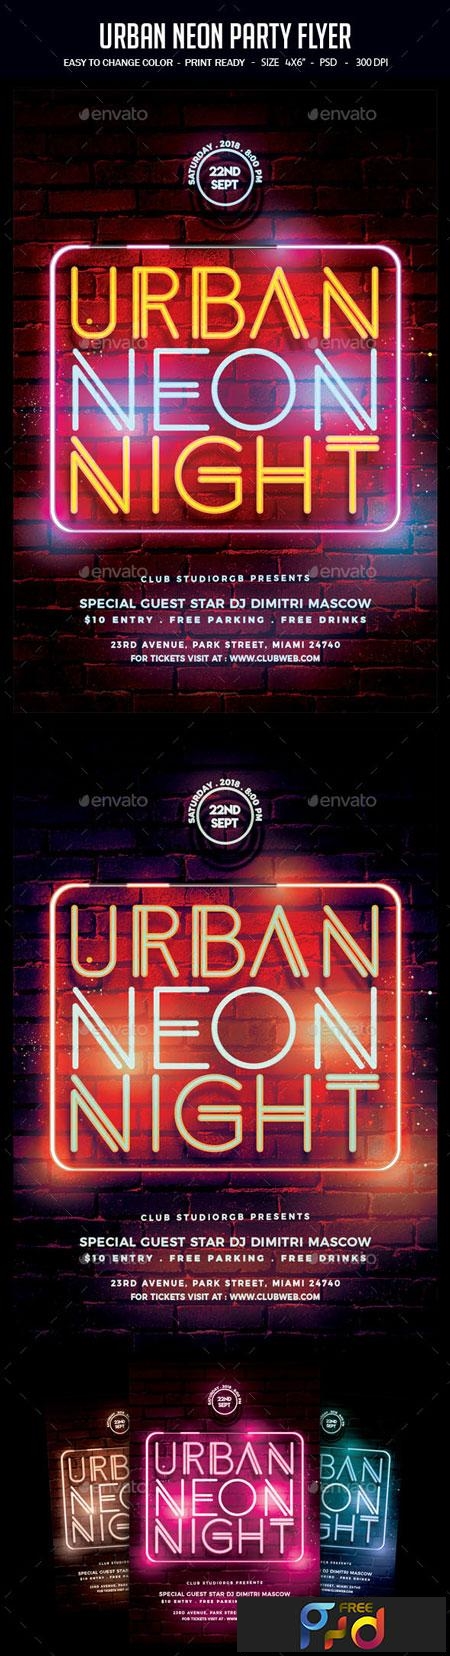 Urban Neon Party Flyer